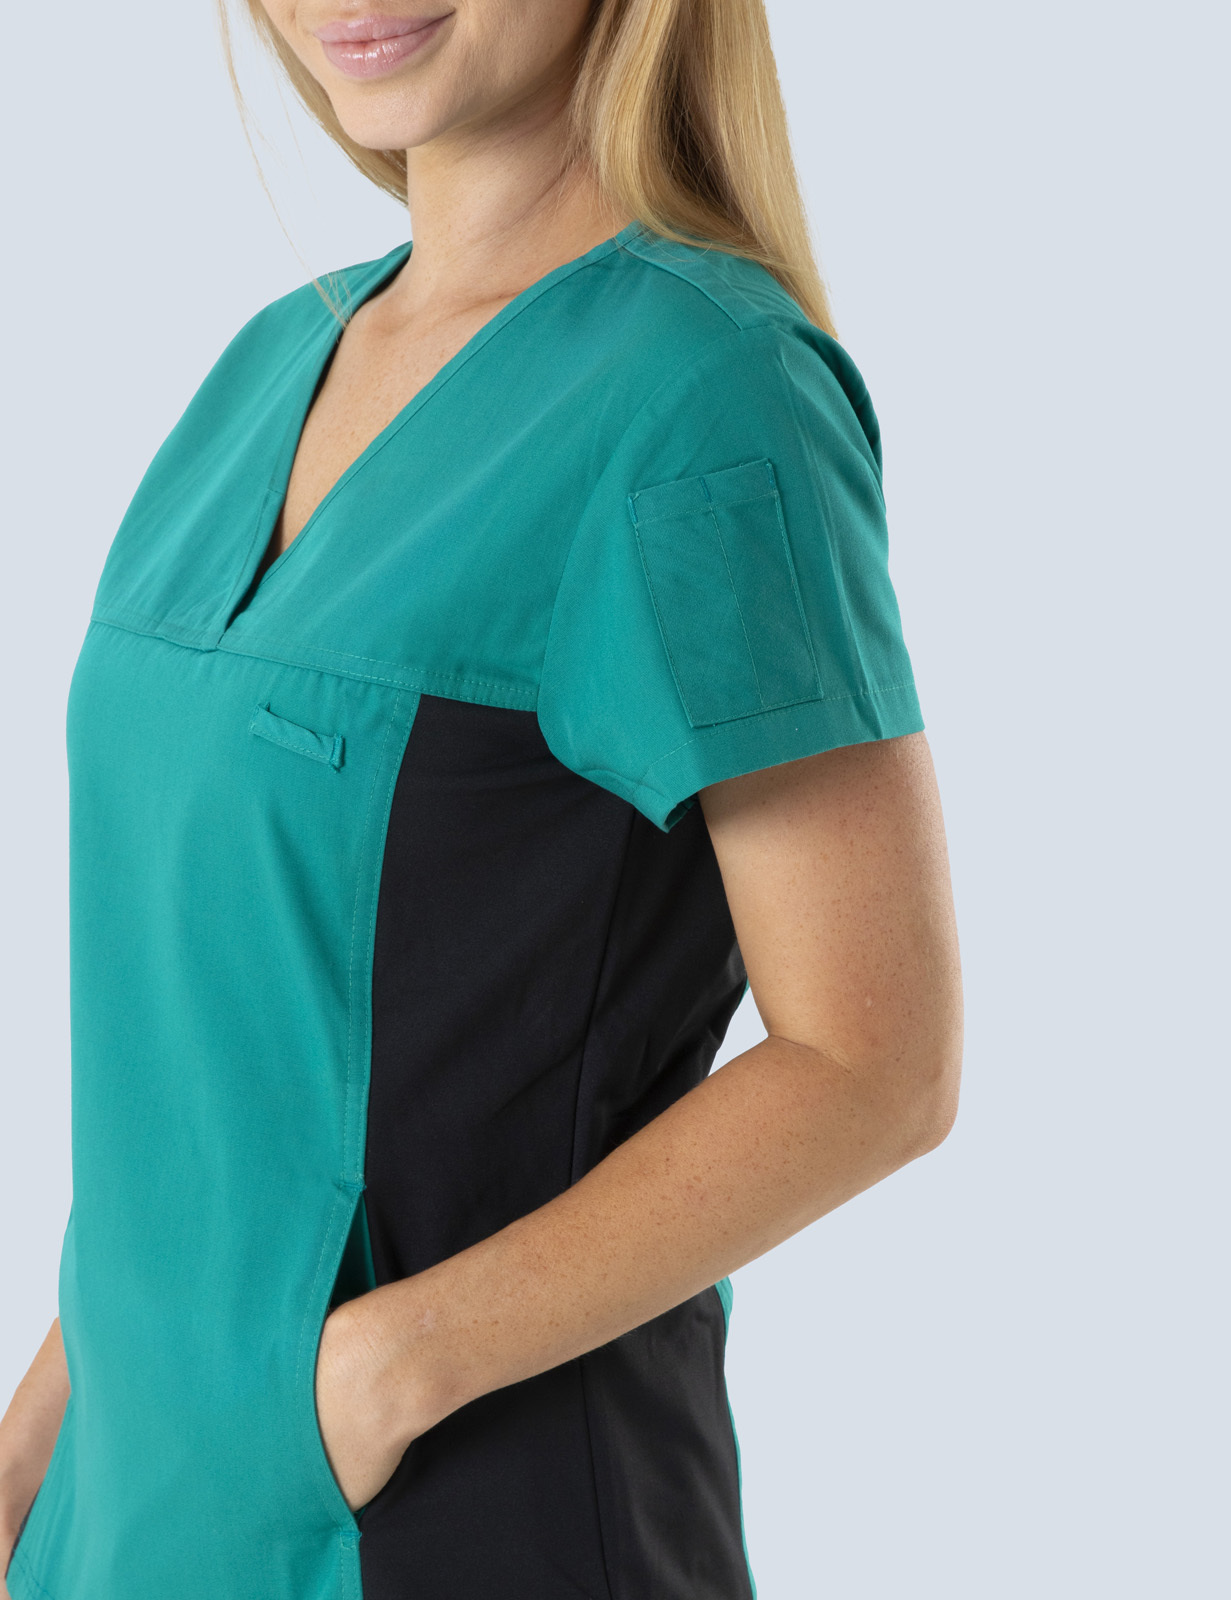 Ashmore Retreat Carer Uniform Top Only Bundle - (Women's Fit Spandex in Hunter incl Logo) 